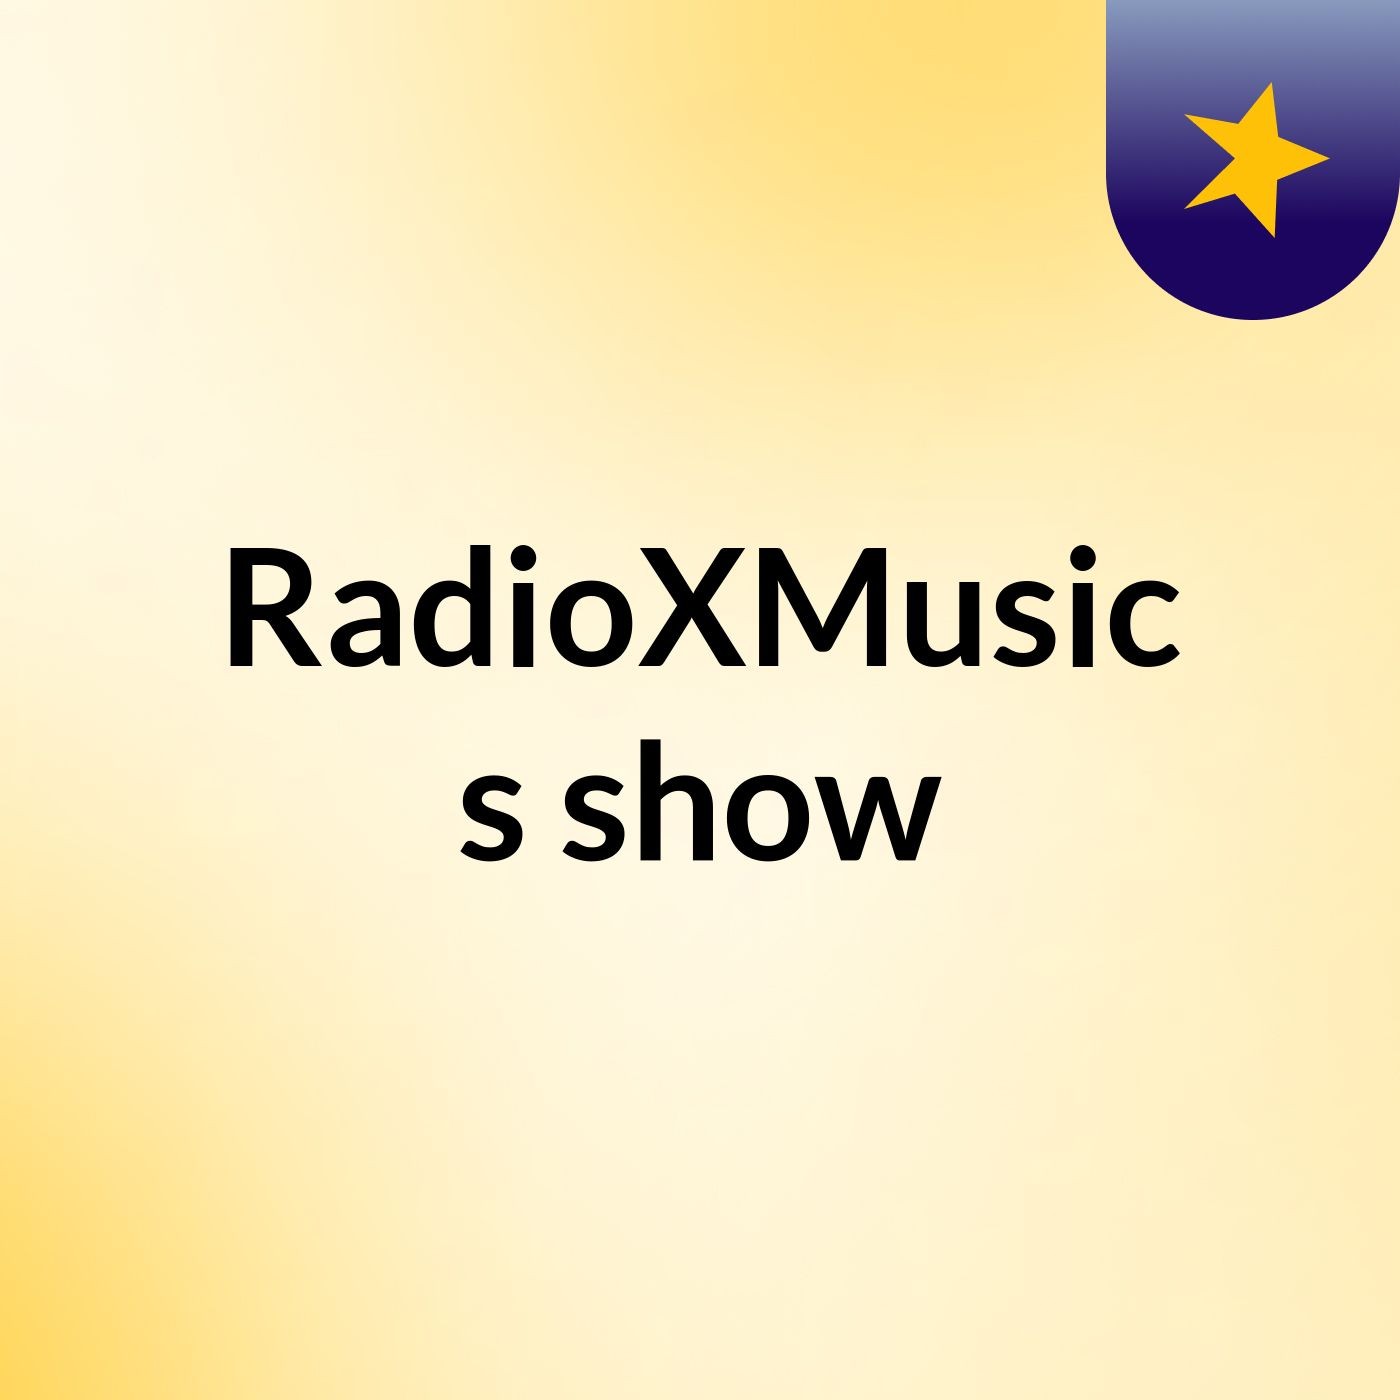 RadioXMusic's show